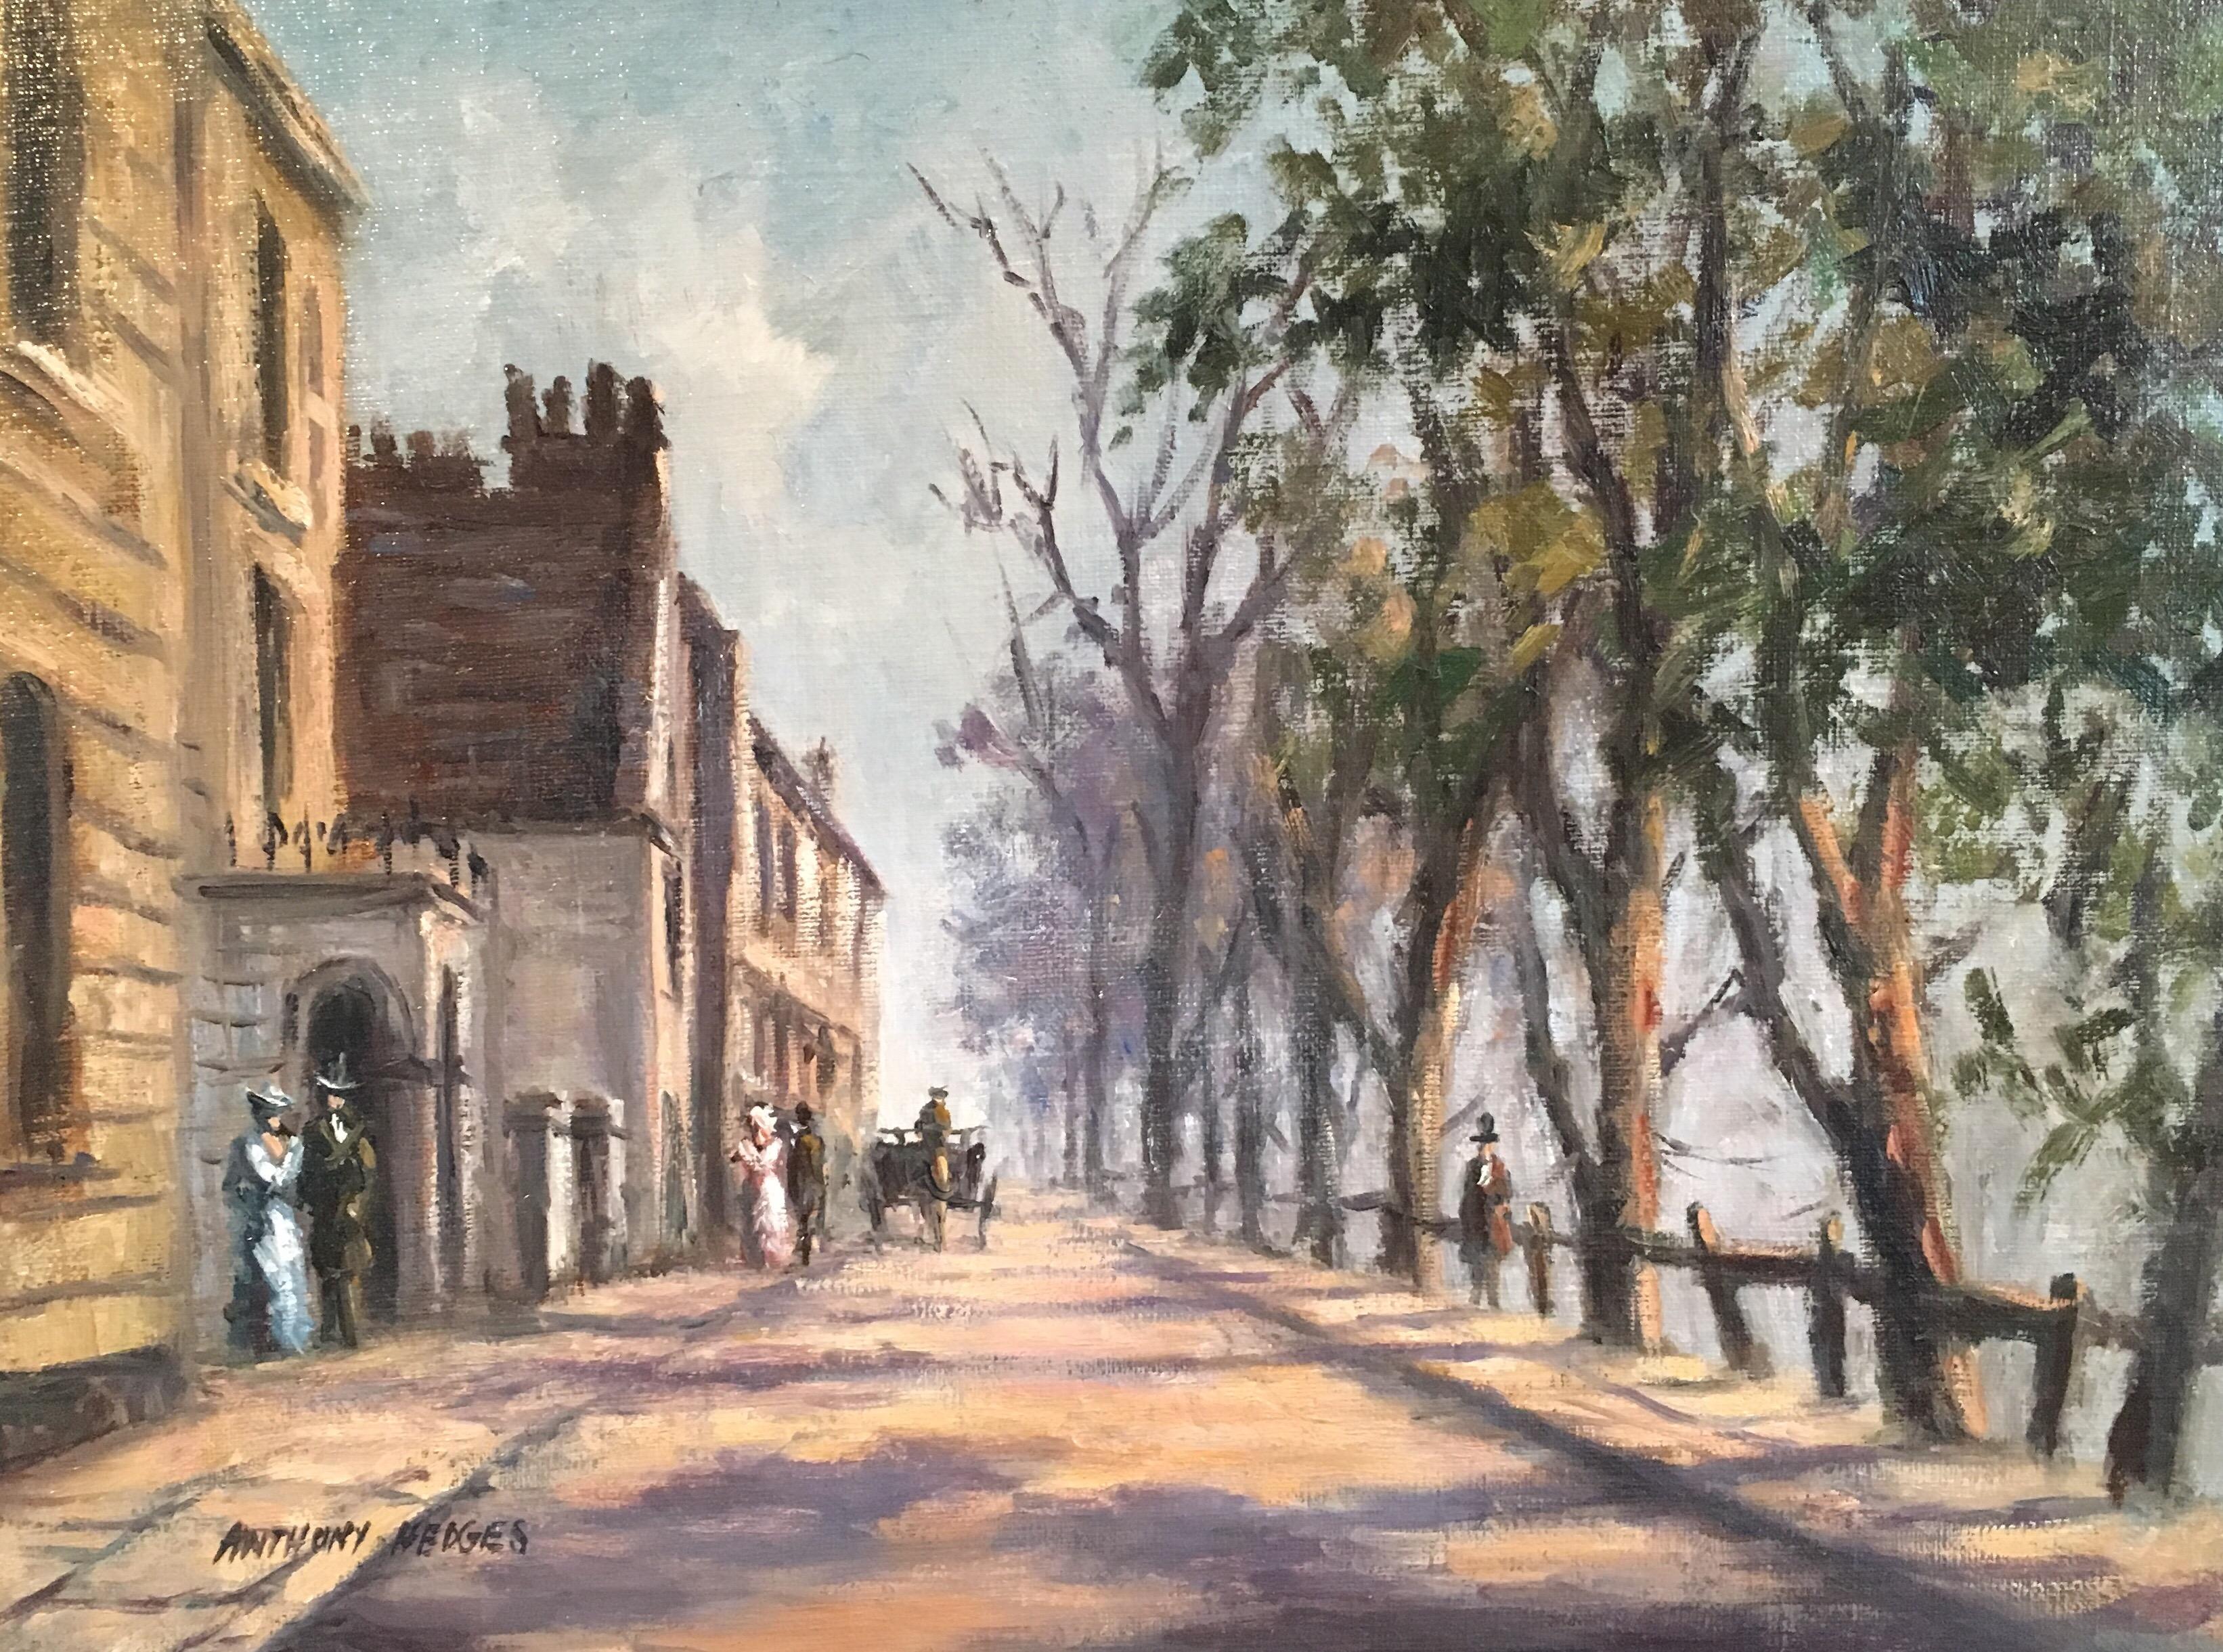 Anthony Hedges Landscape Painting - Dappled Light, Impressionist City Scene, Signed Oil Painting